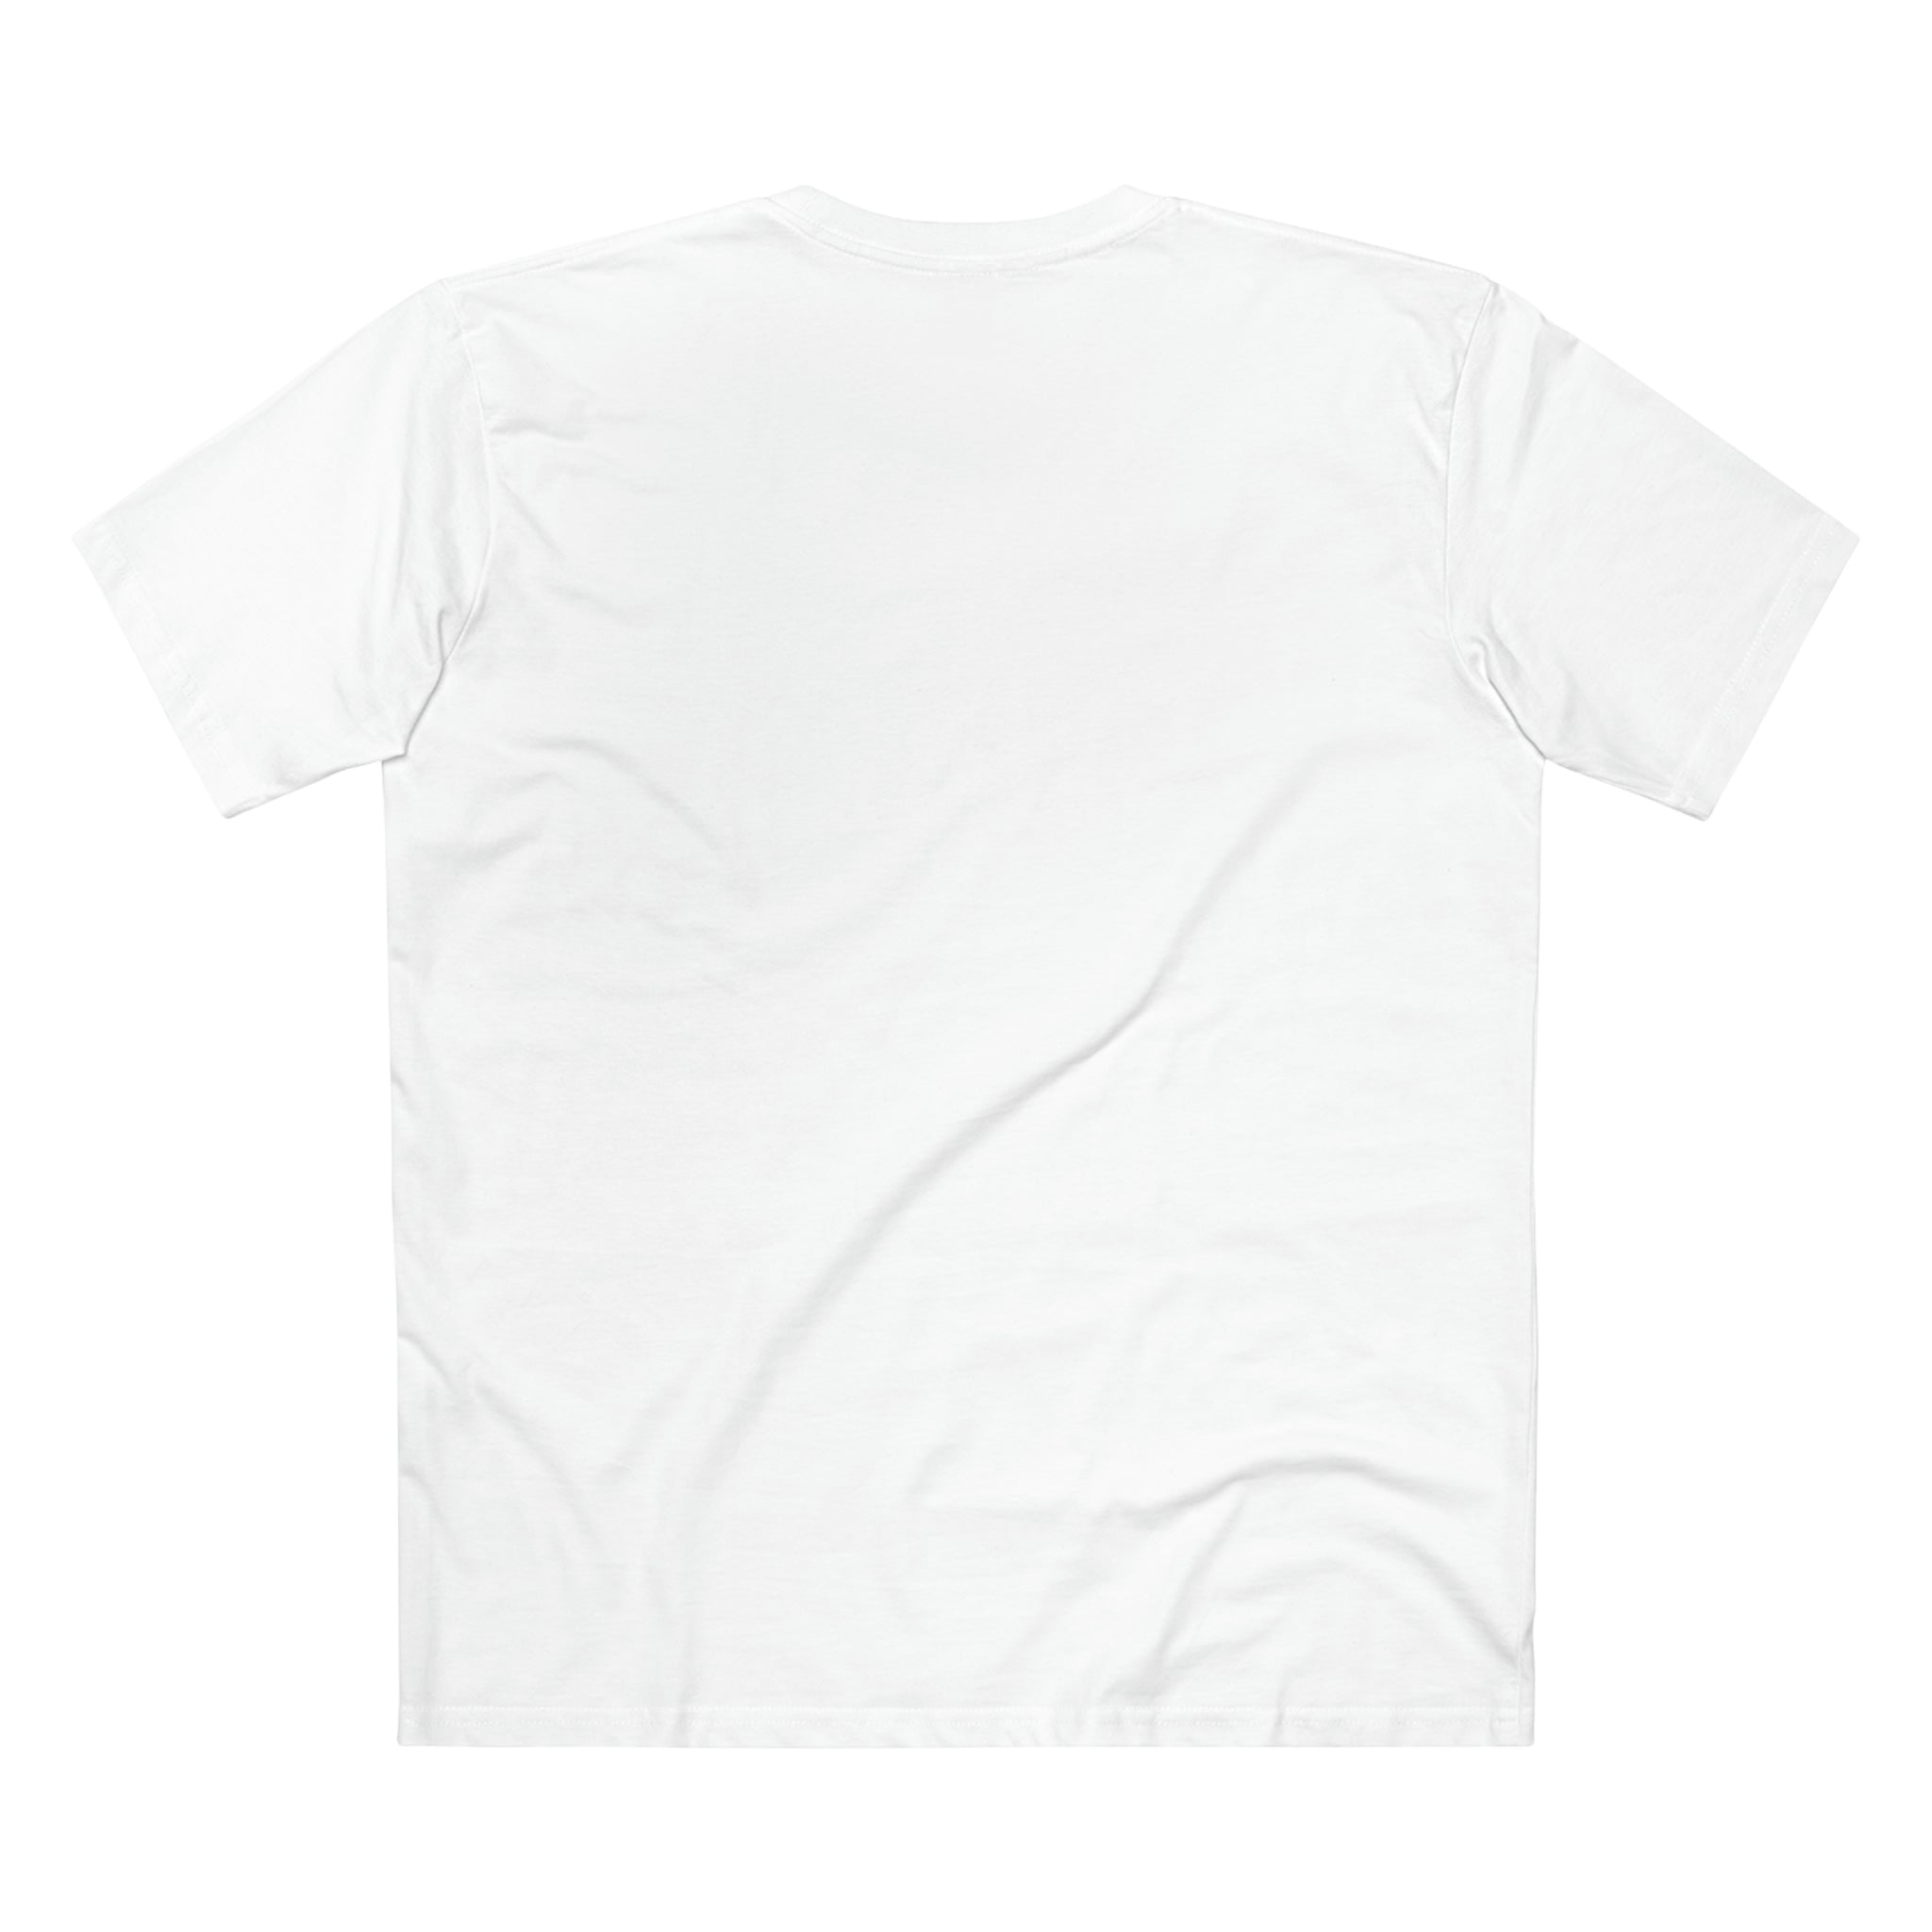 Christmas Dogs, Beagle Dog | Unisex Premium Cotton Crewneck T-Shirt in White, Size AU S-5XL | Regular Fit, Short Sleeves, Preshrunk Material